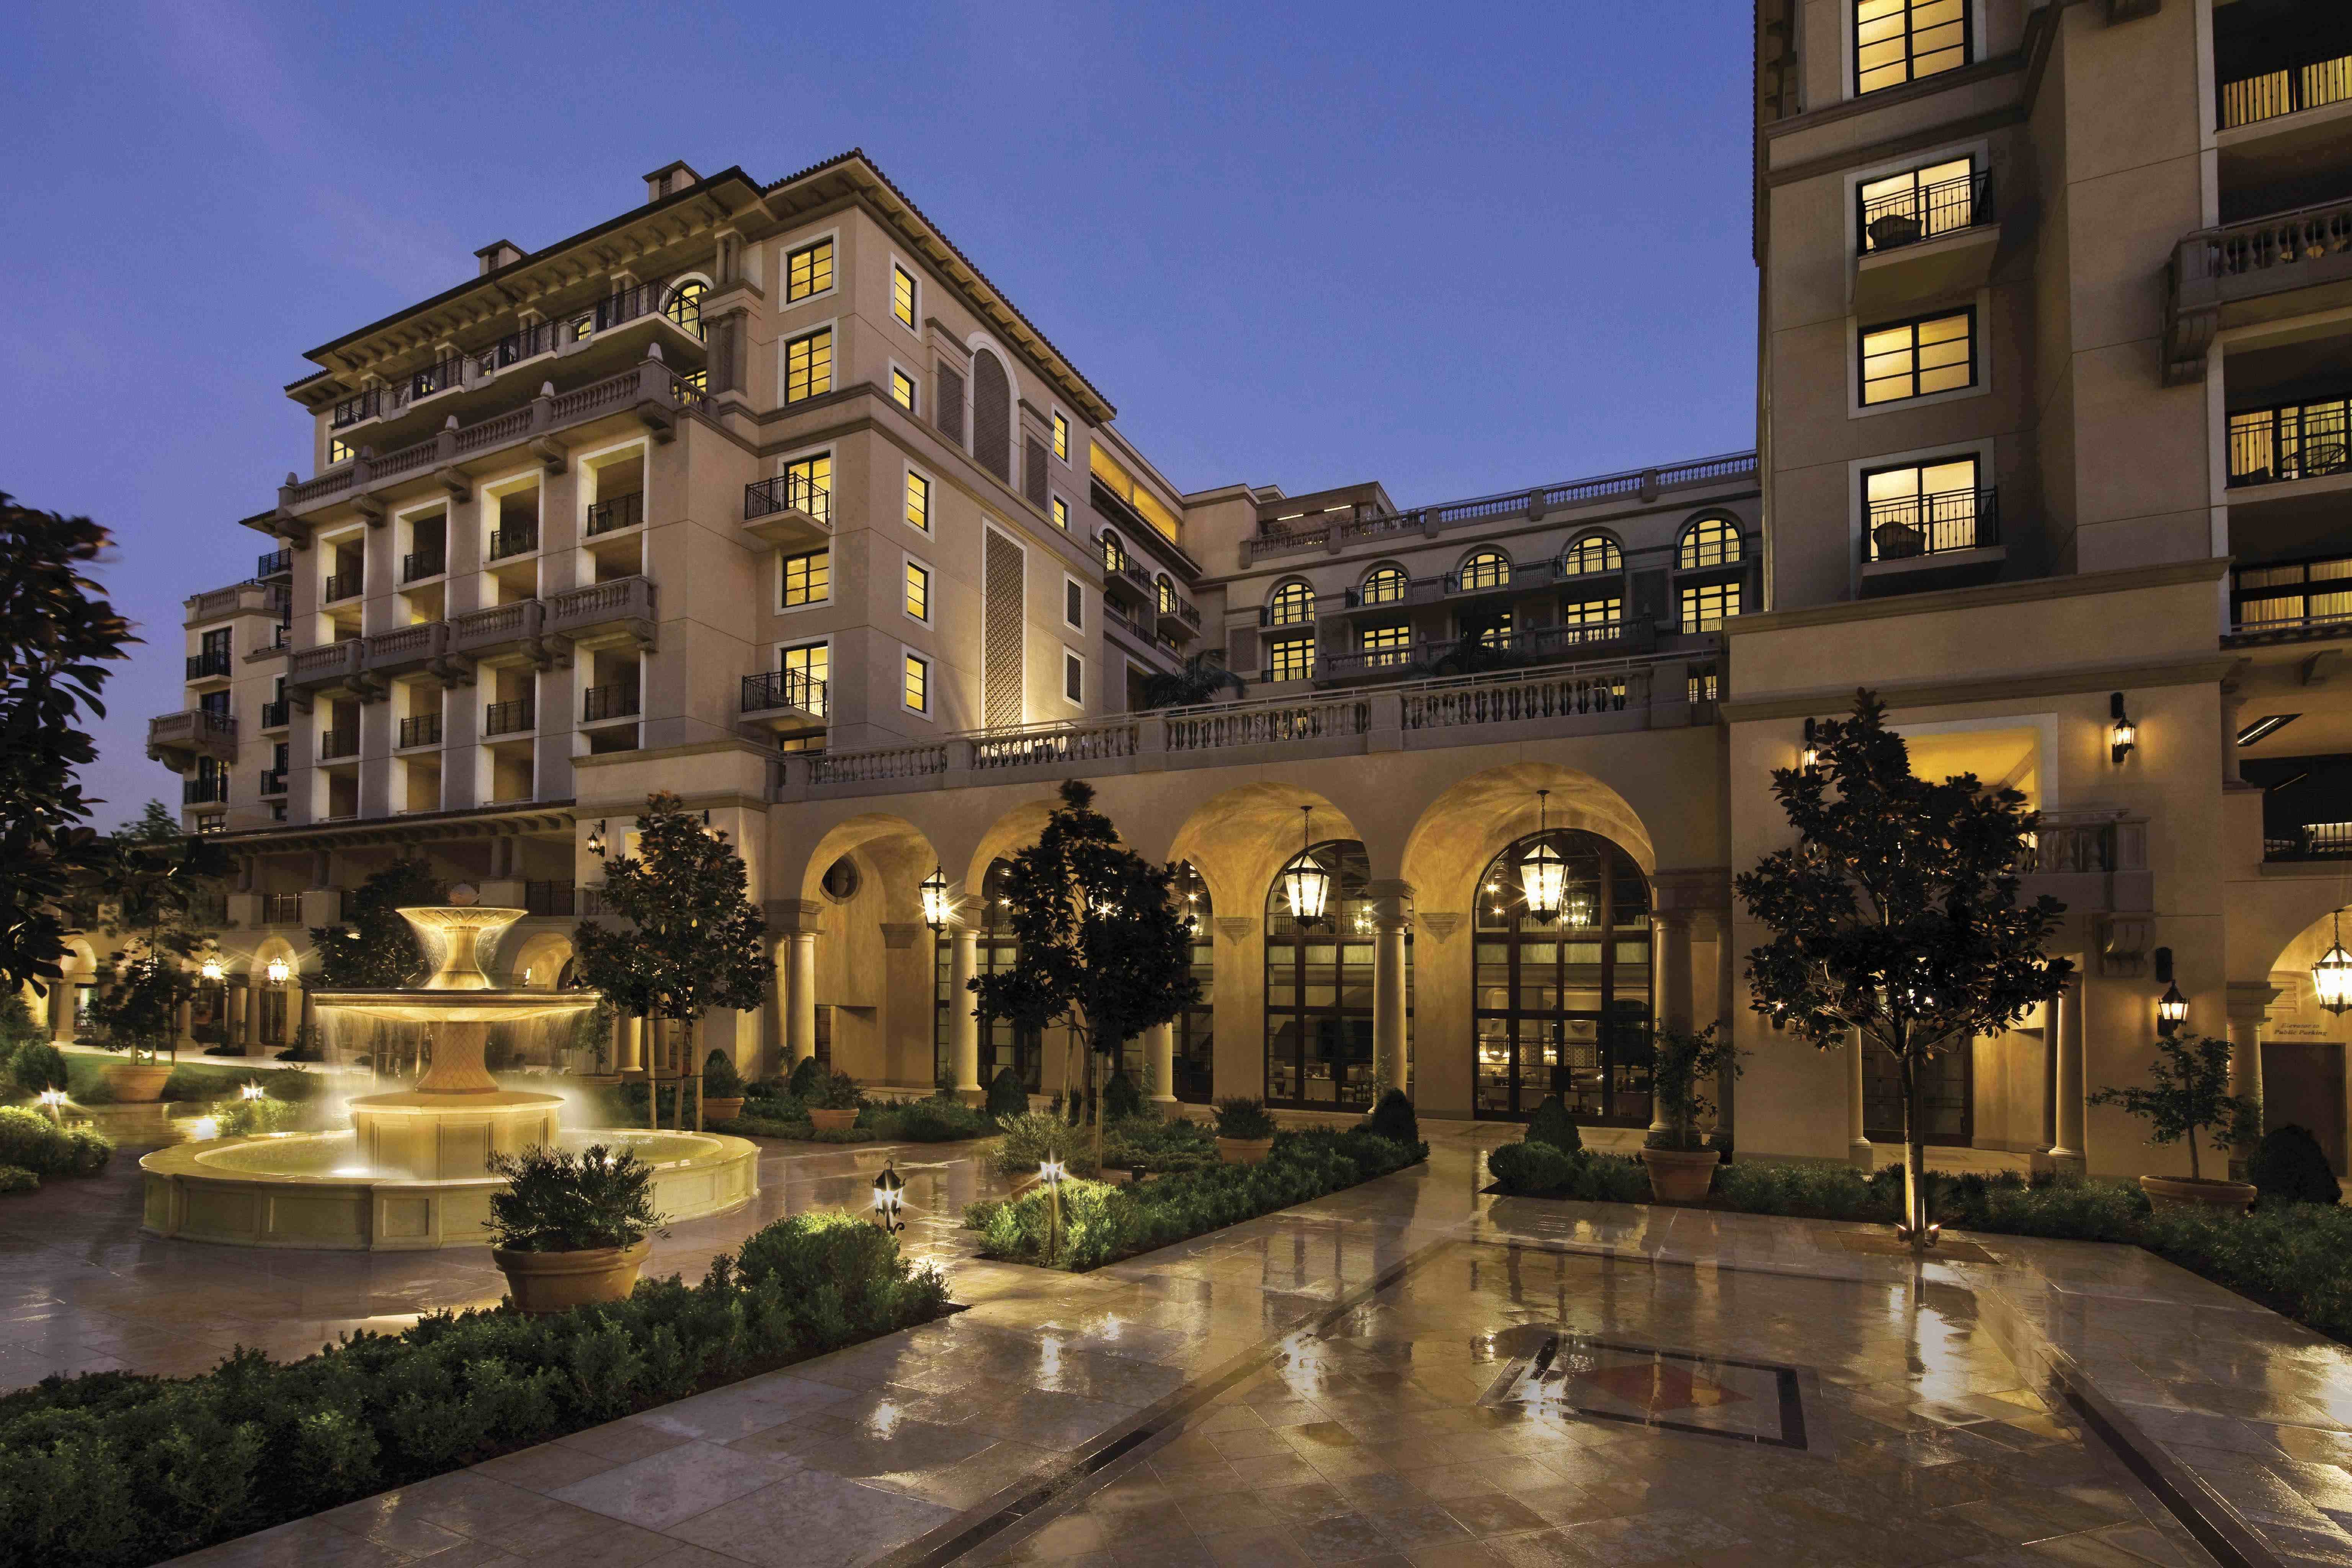 Hotels In Pasadena Ca - Instant Grand Duc : Le Style Rétrofuturiste De ...